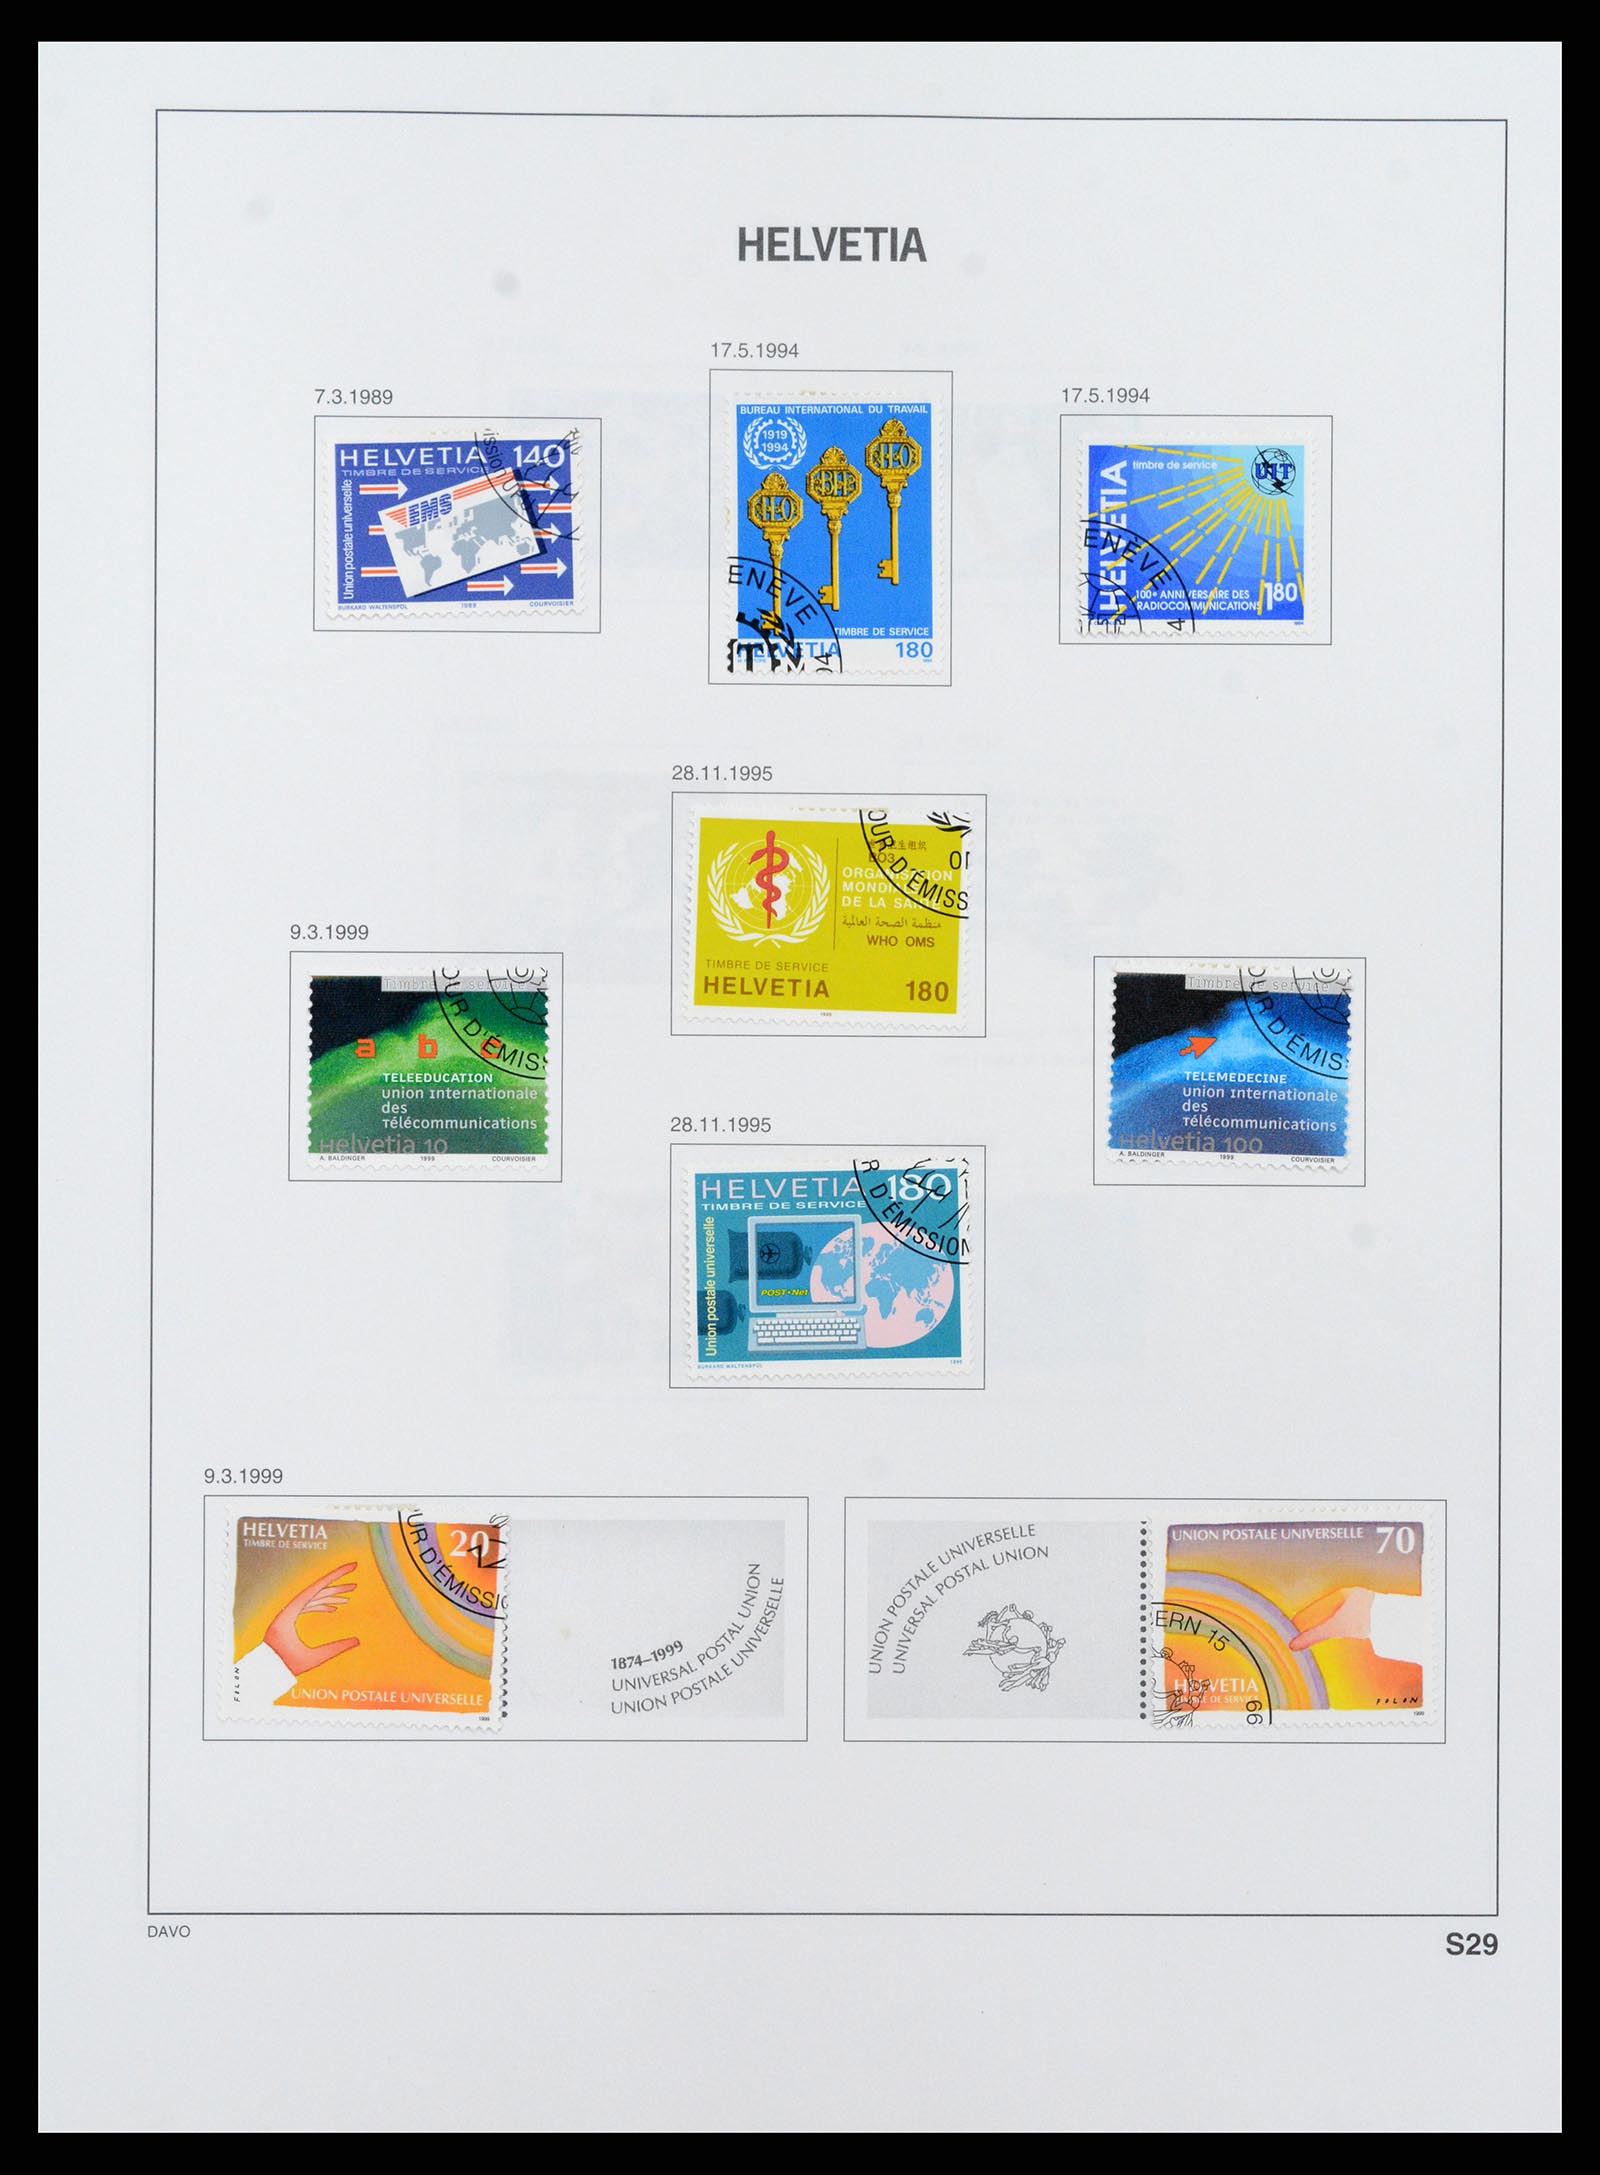 37361 172 - Stamp collection 37361 Switzerland 1850-2005.